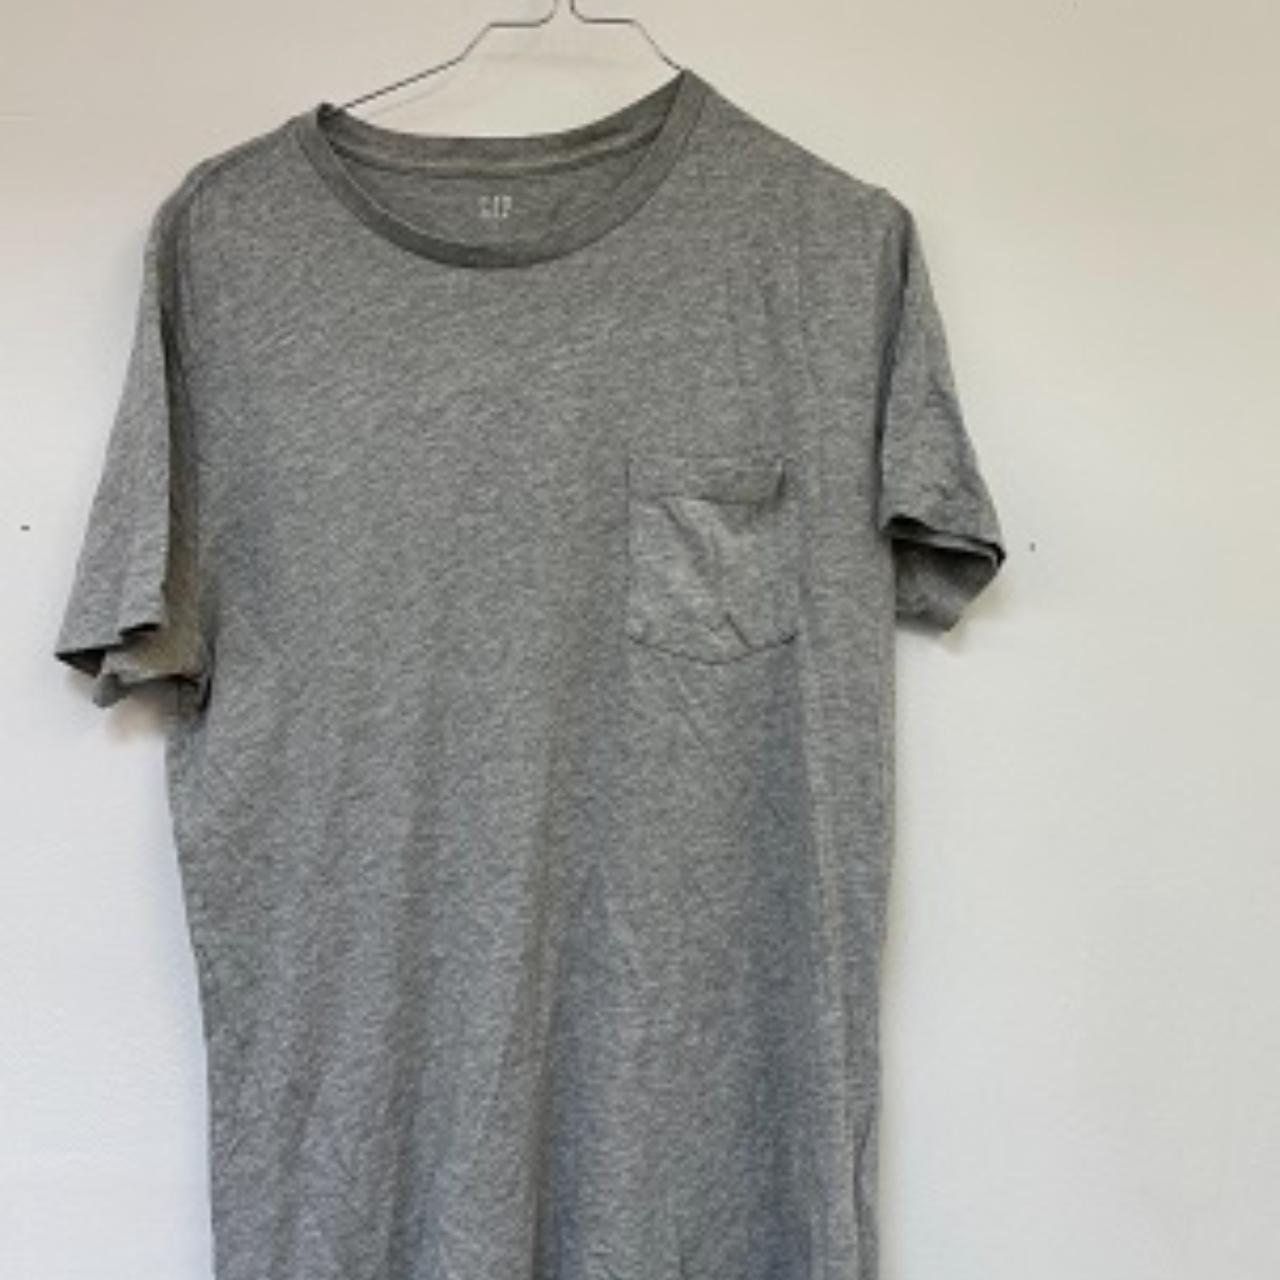 Vintage GAP grey mens basic tshirt size S